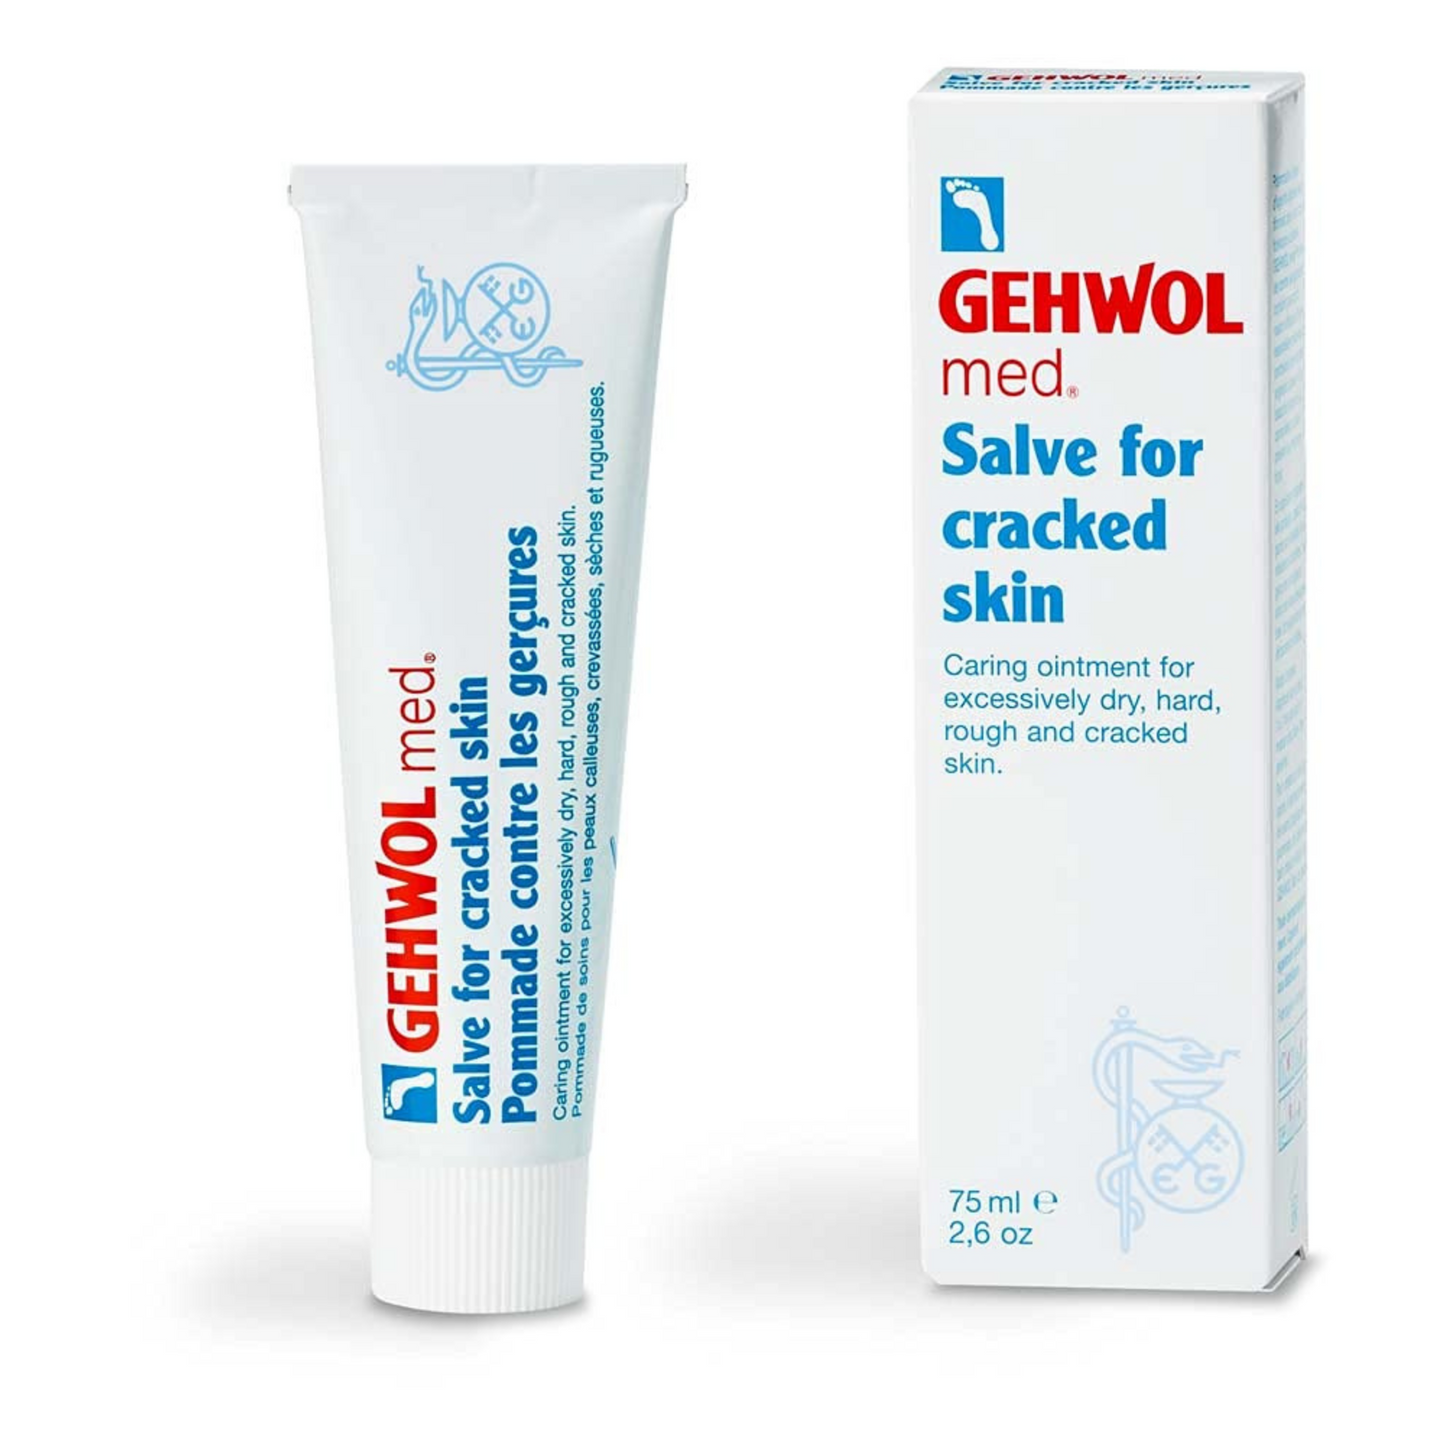 Primary Image of Gehwol med Salve for Cracked Skin (75 ml) 